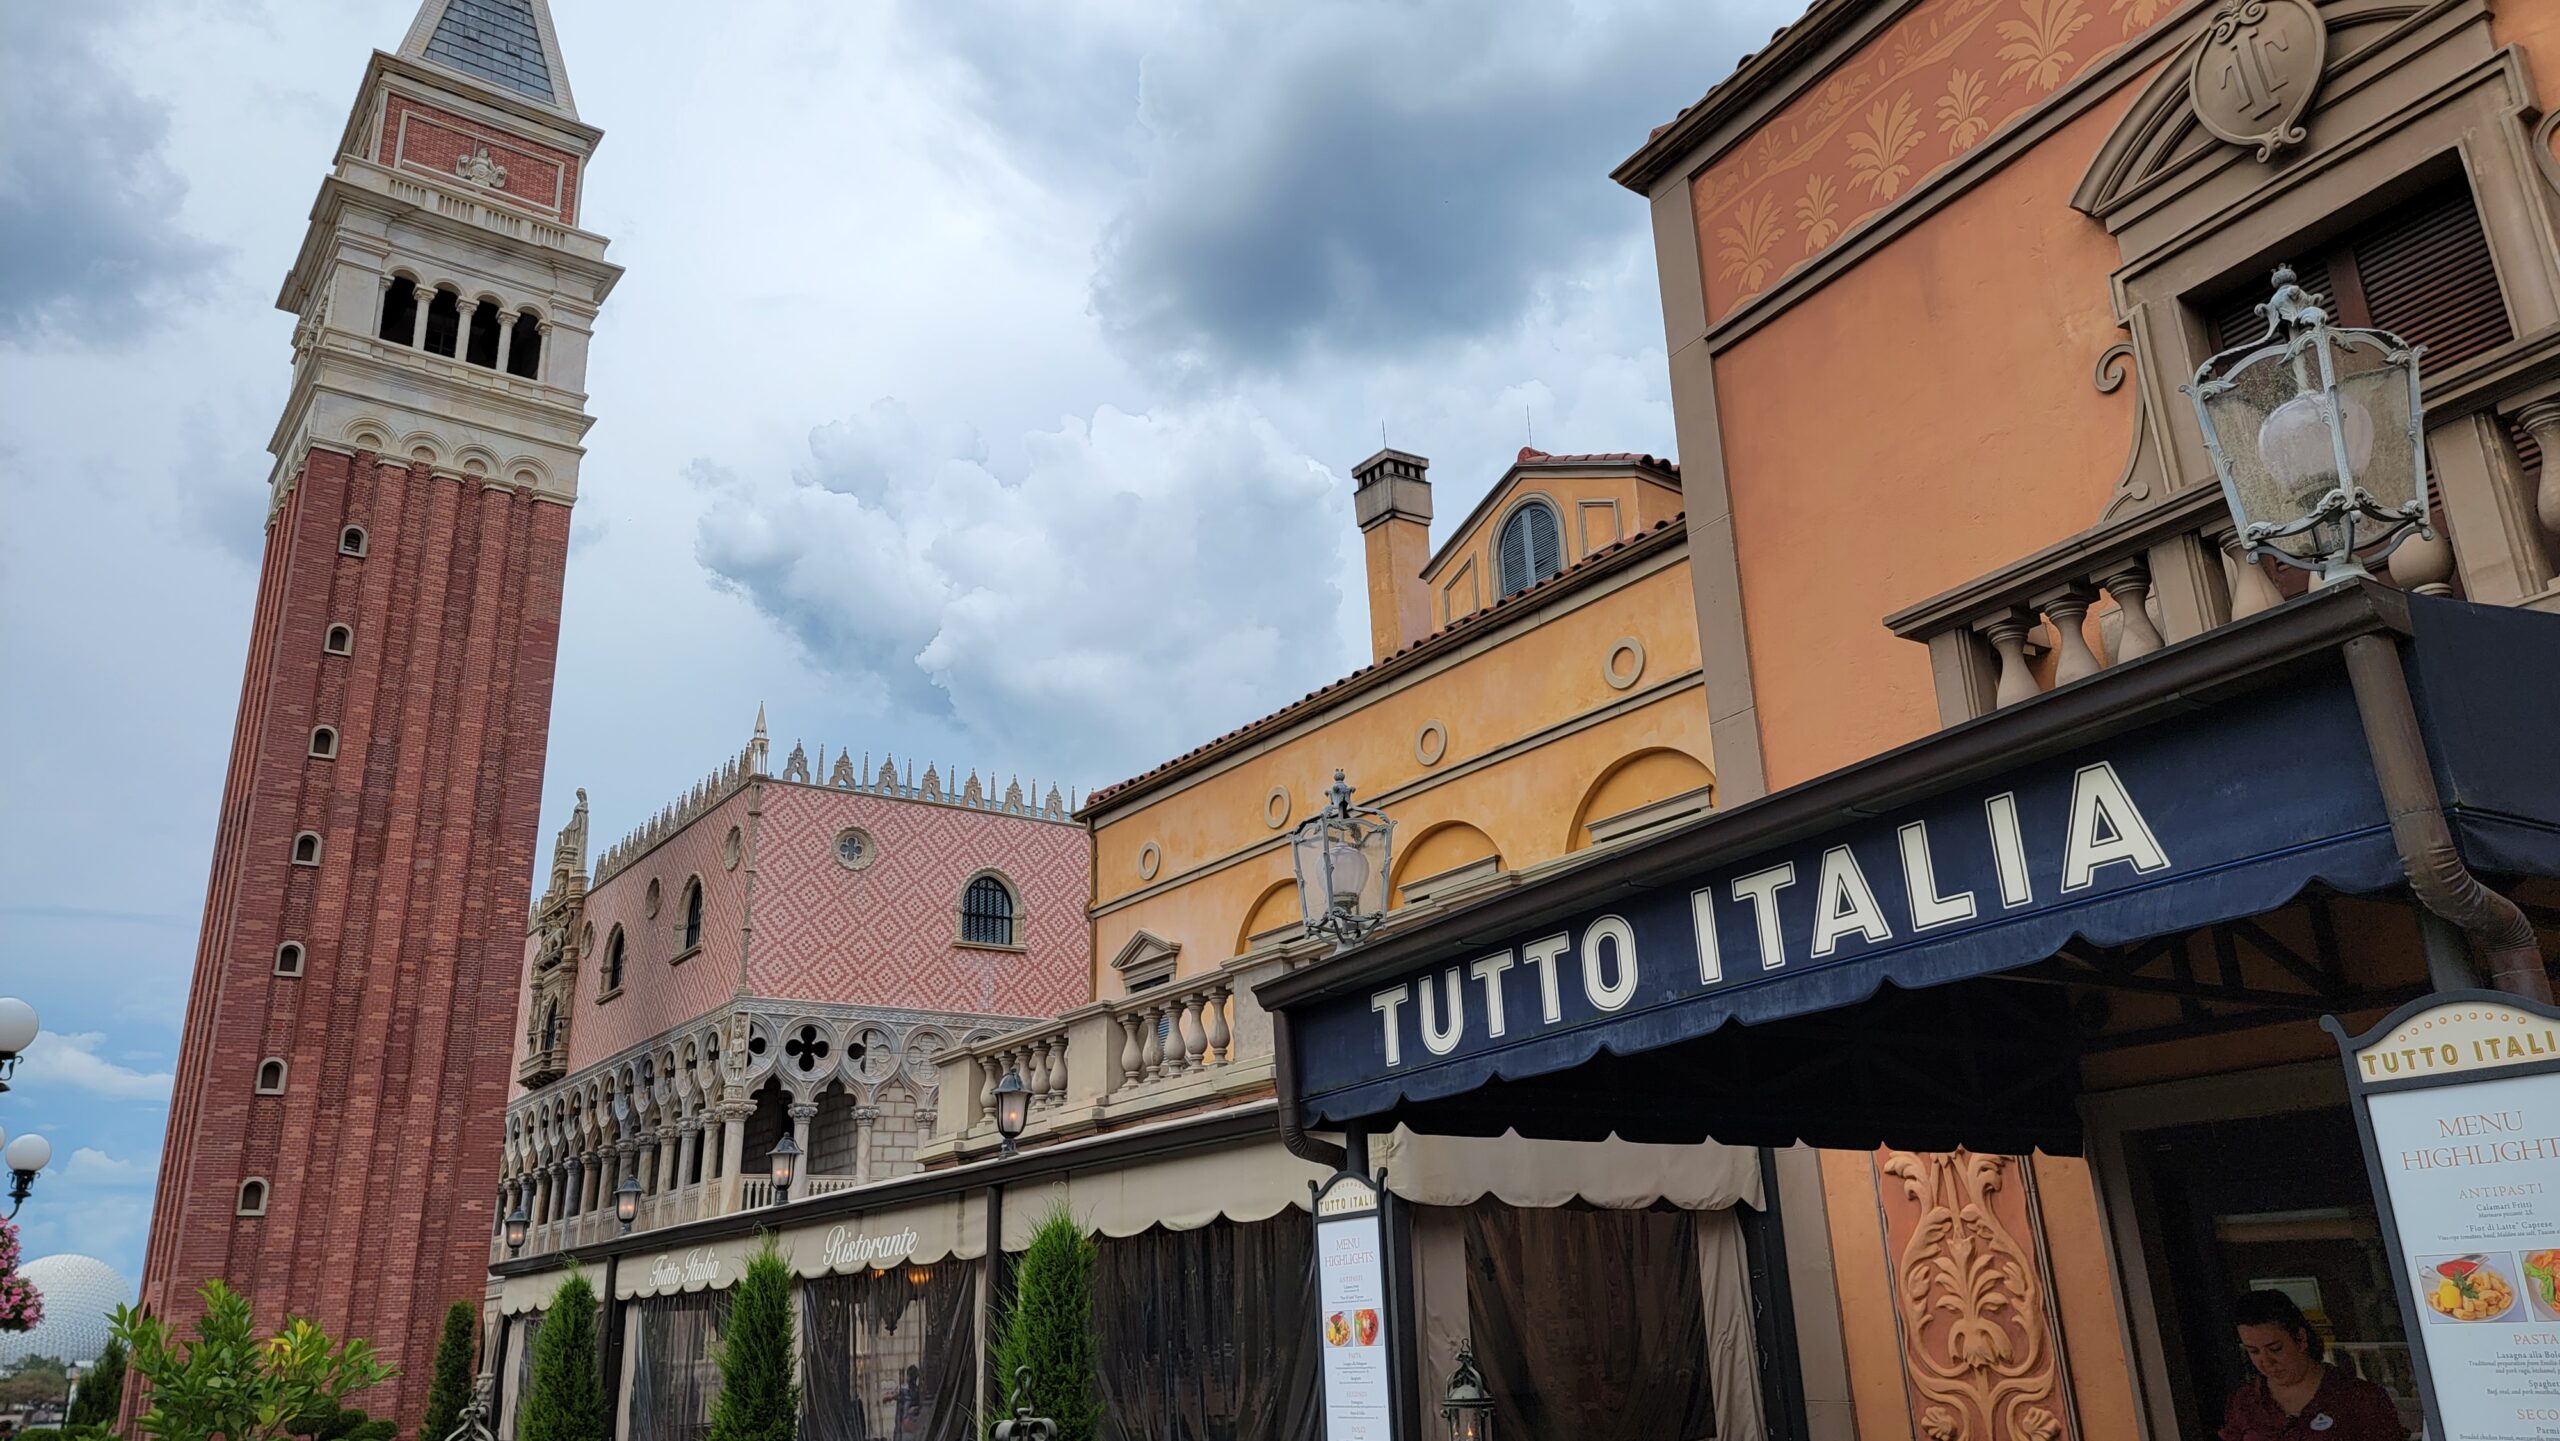 Tutto Italia Ristorante is one of the best restaurants in Orlando